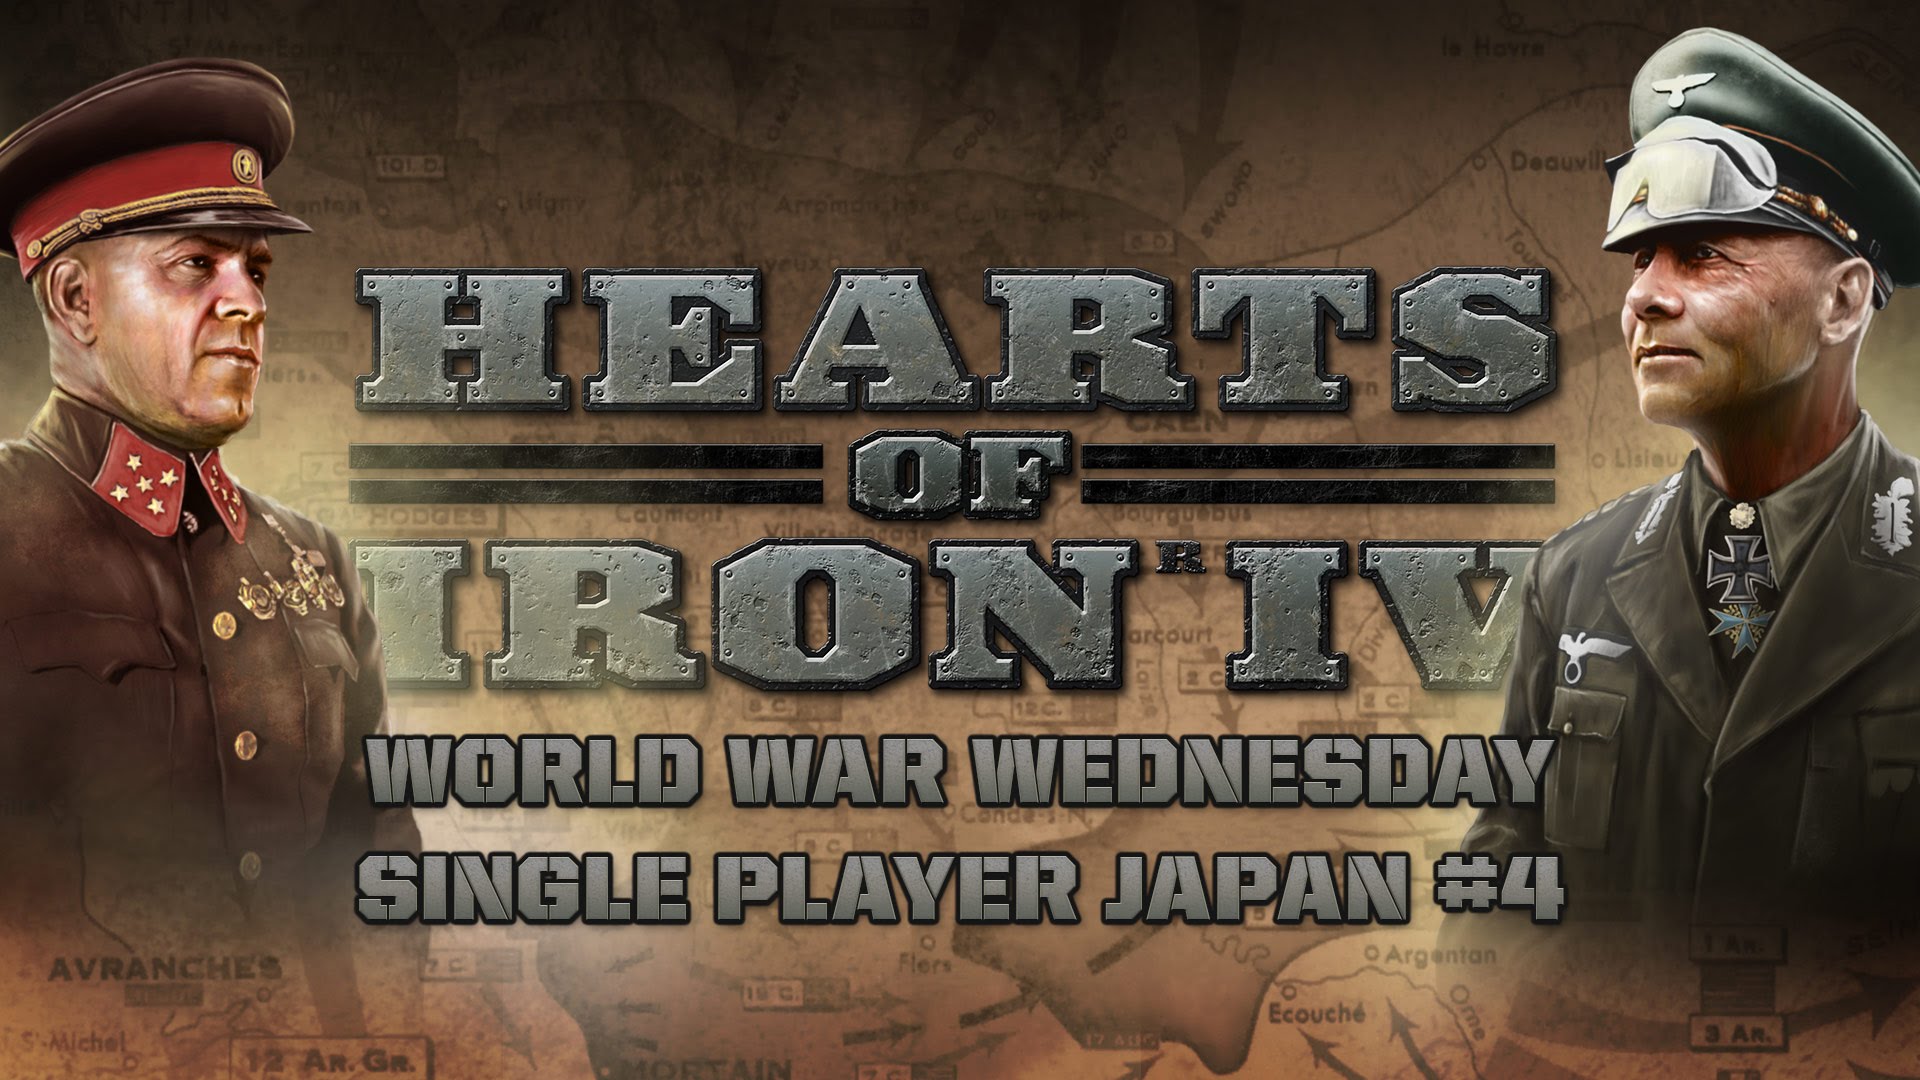 Hearts of Iron IV – “World War Wednesday” – Single Player Japan #4